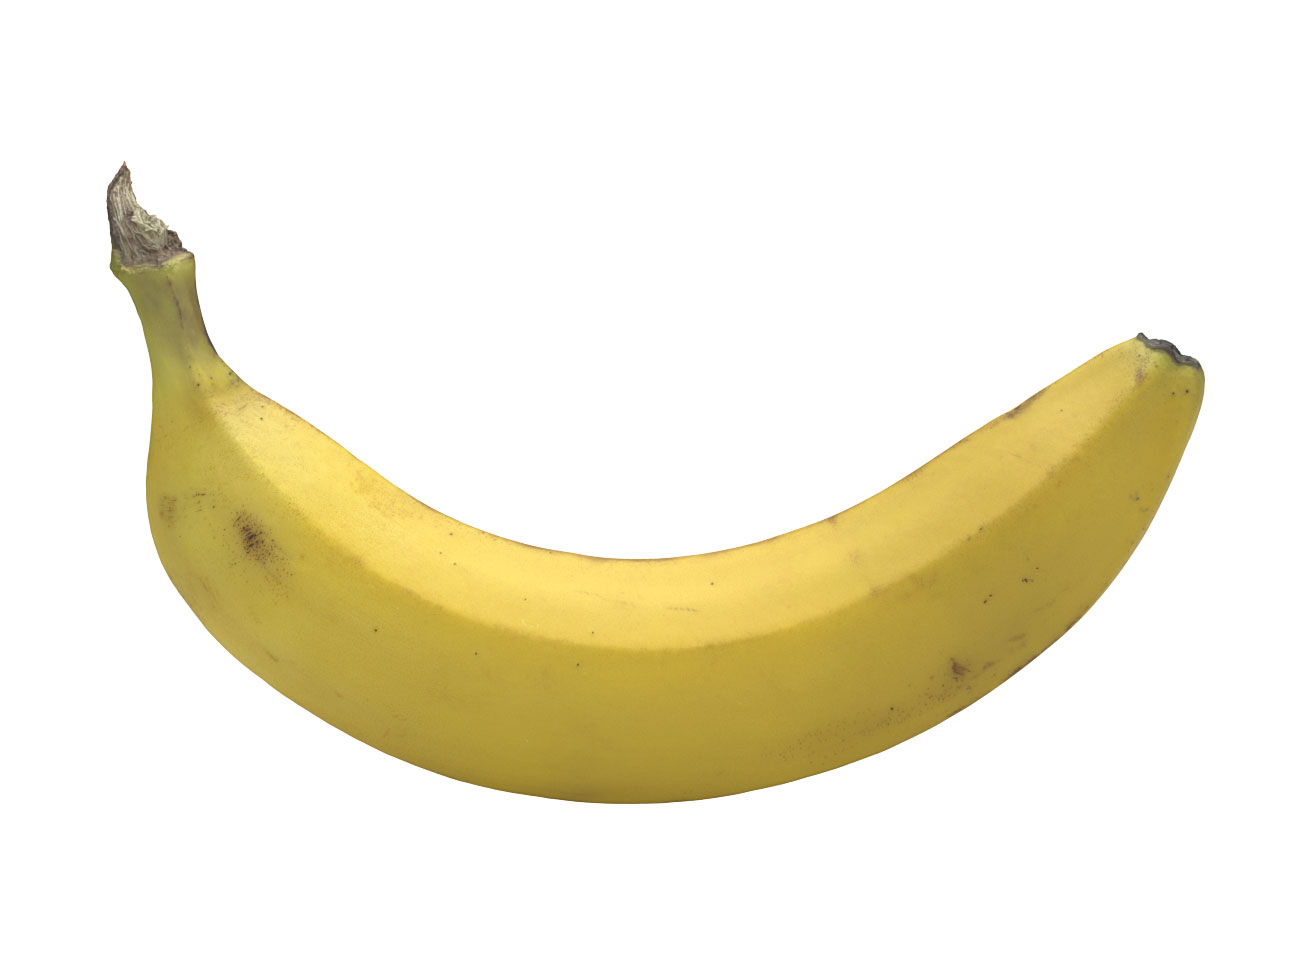  Banana  1 creative crops